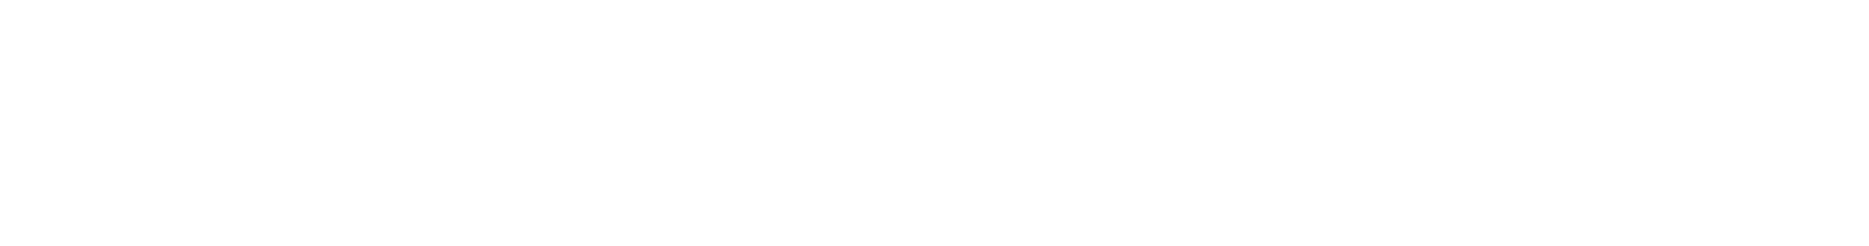 Playcity logo